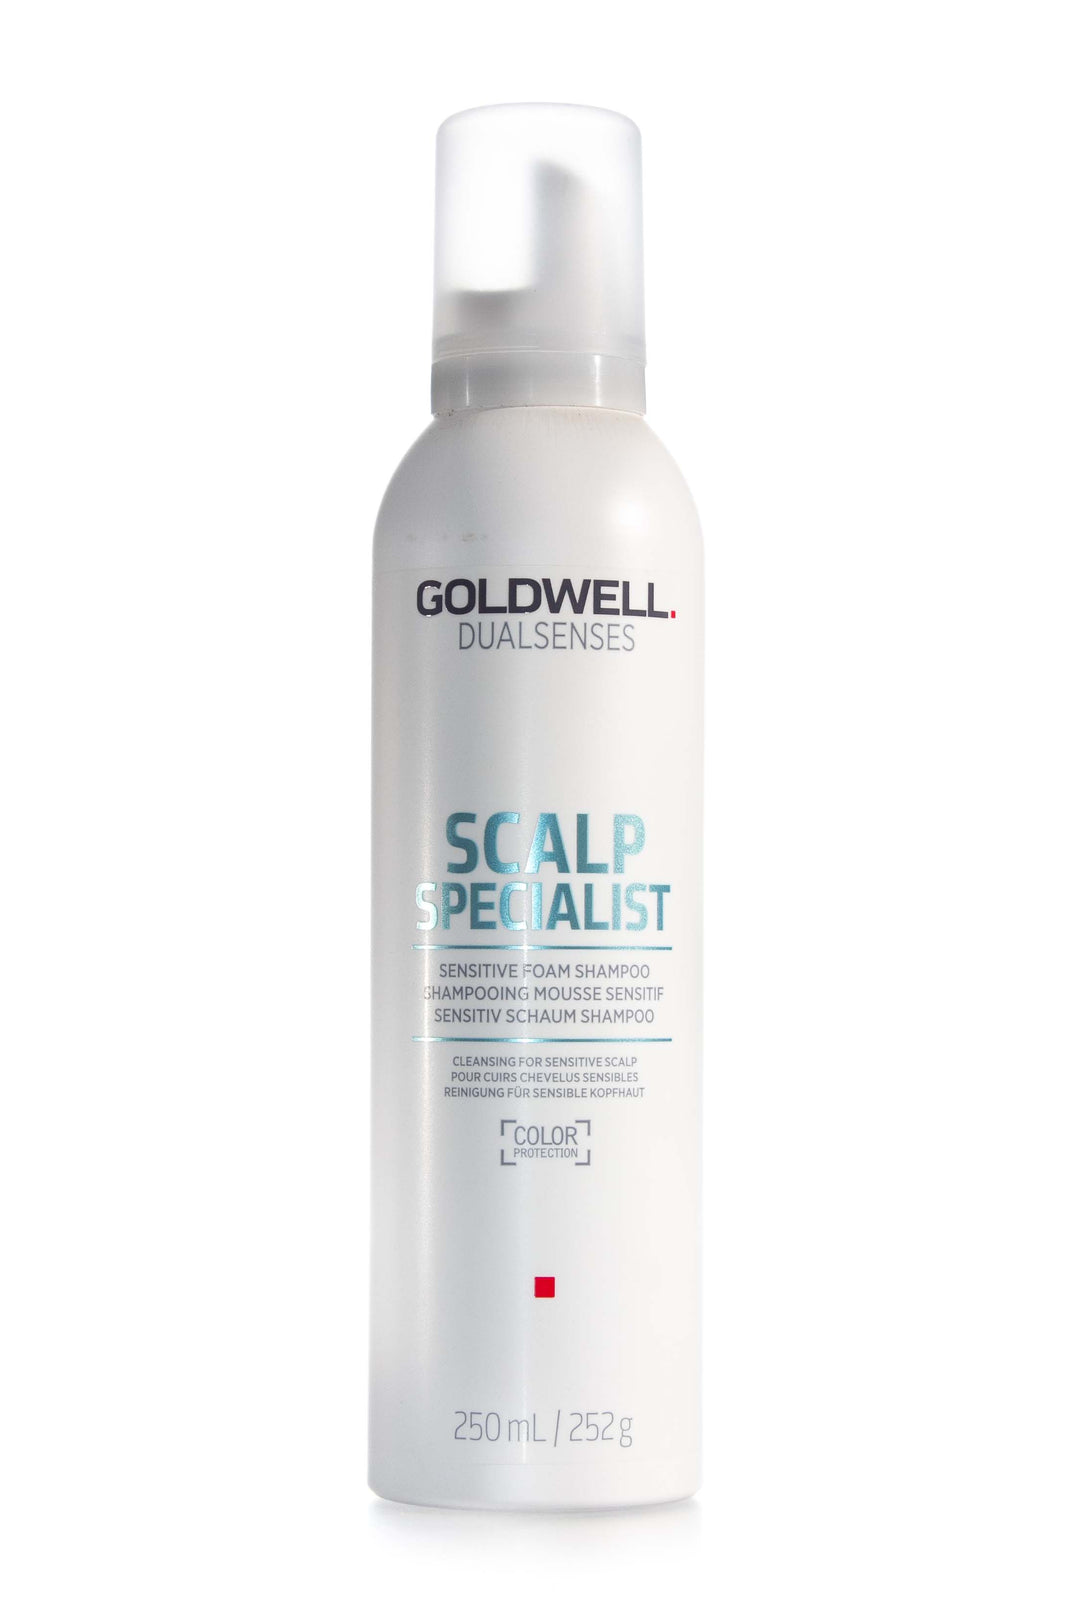 GOLDWELL Dual Senses Scalp Specialist Sensitive Foam Shampoo | 250ml